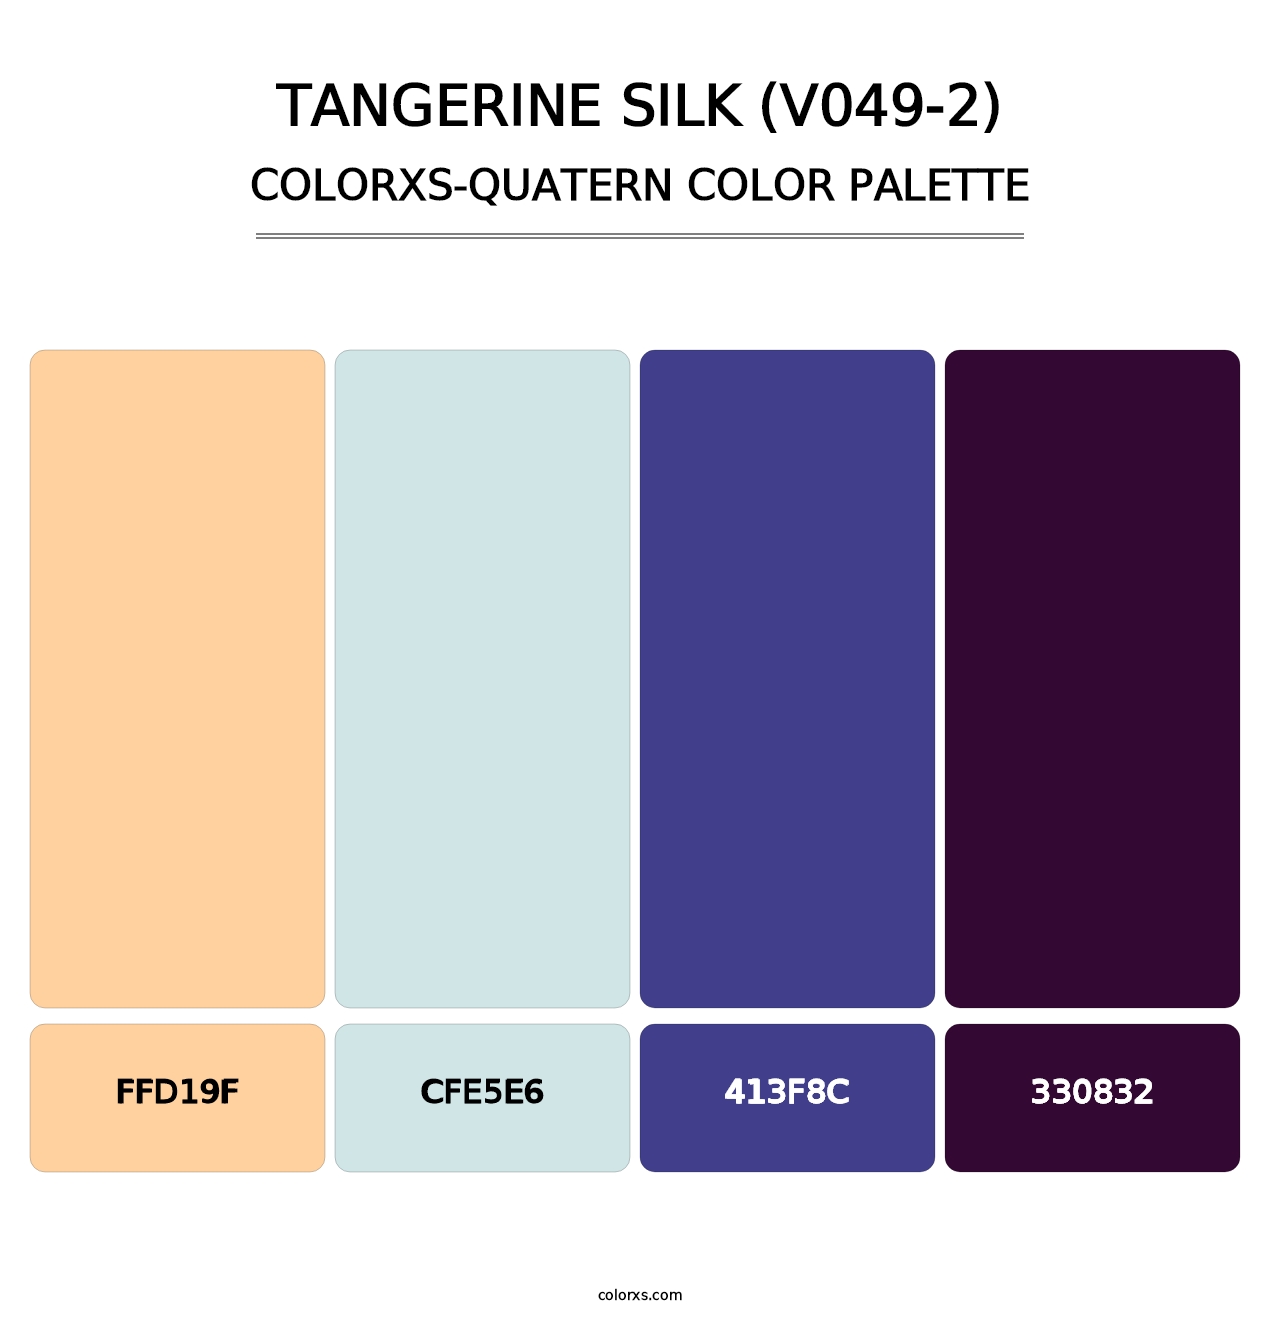 Tangerine Silk (V049-2) - Colorxs Quatern Palette